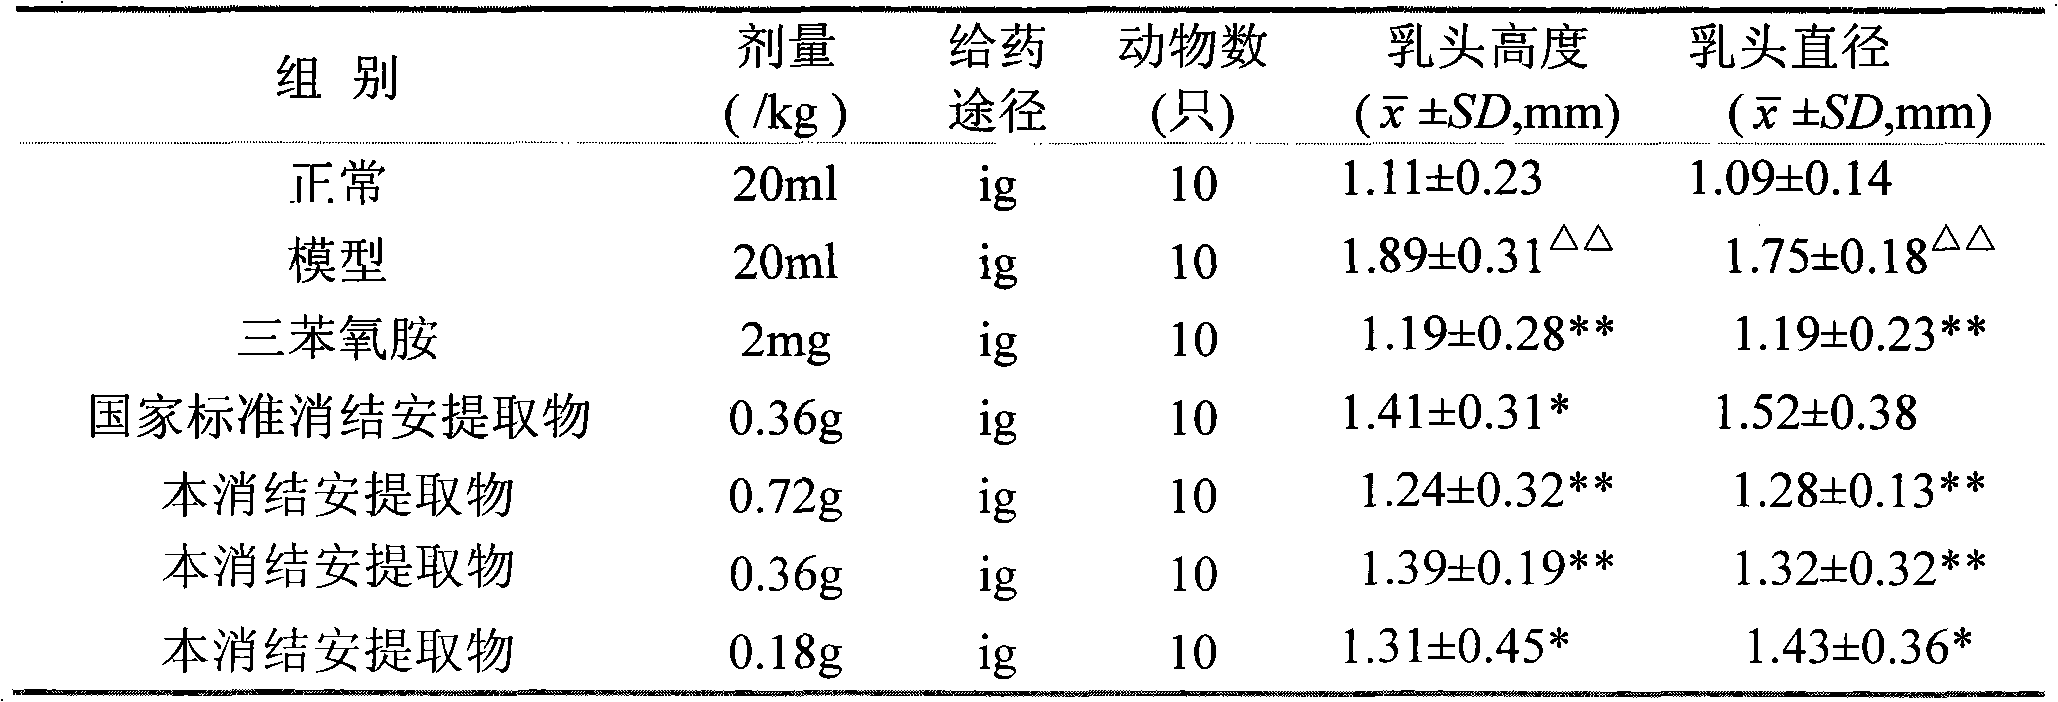 Preparation method of Xiaojiean extract